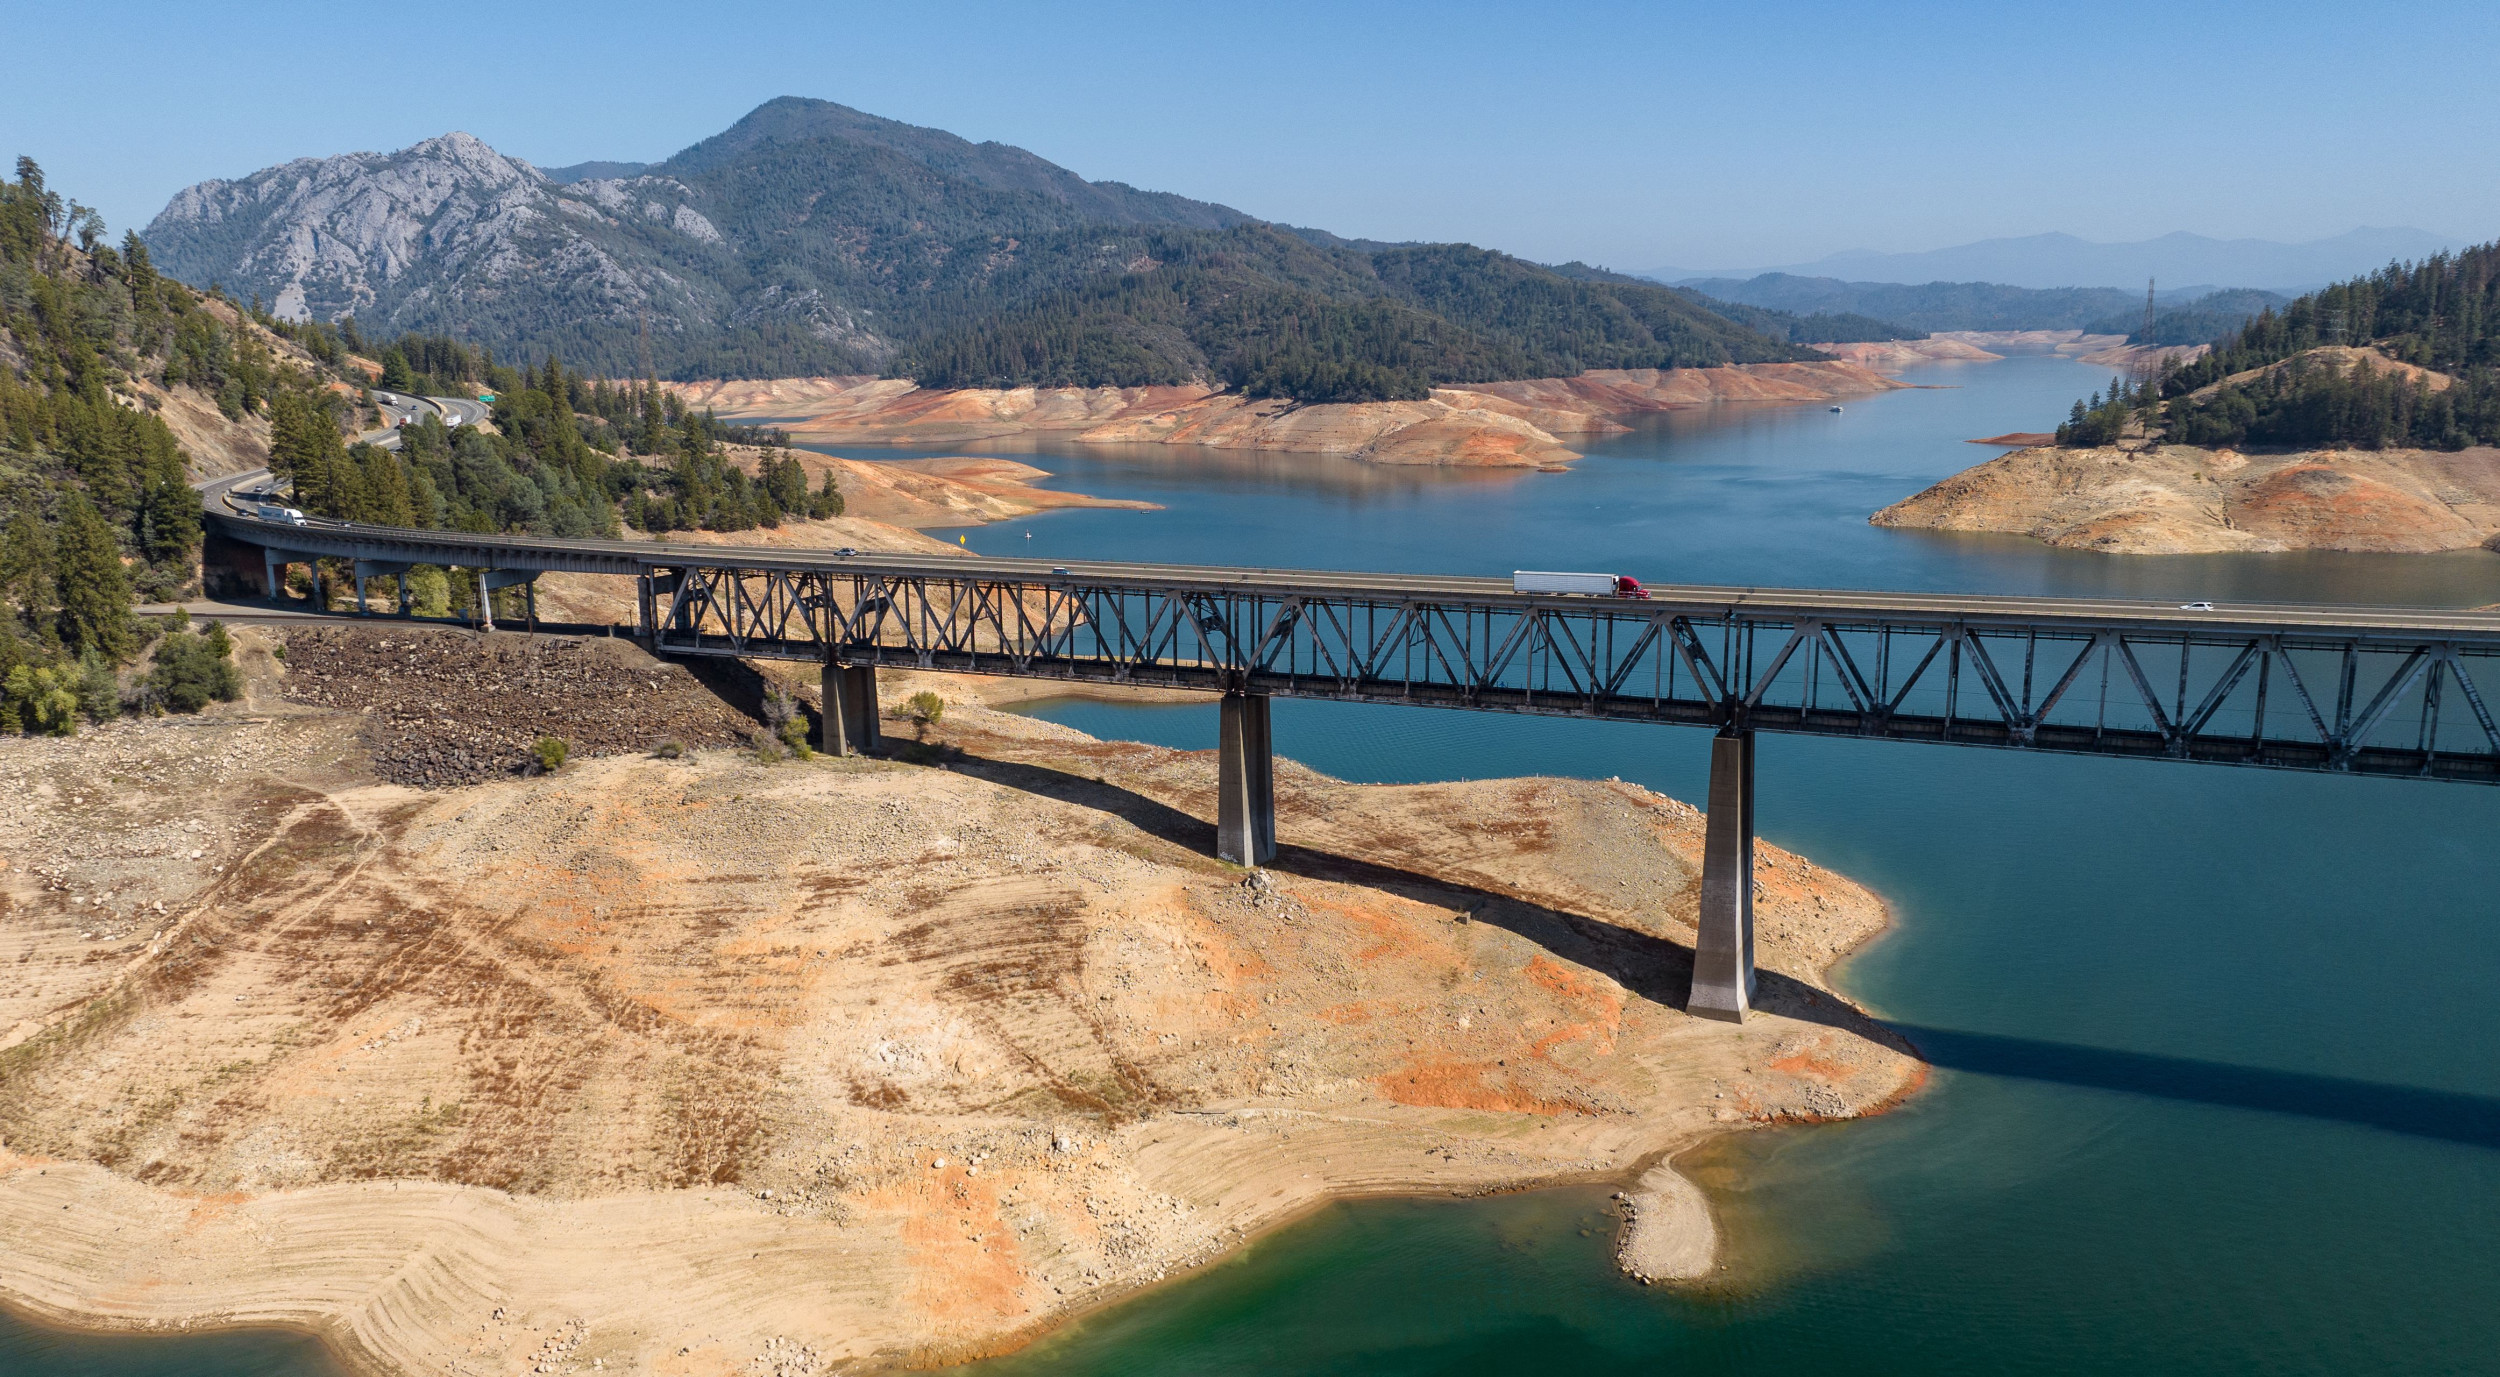 Калифорния водохранилище Шаста. Мост через озеро (2022). Климат Калифорнии. Нэшнл Сити Калифорния.